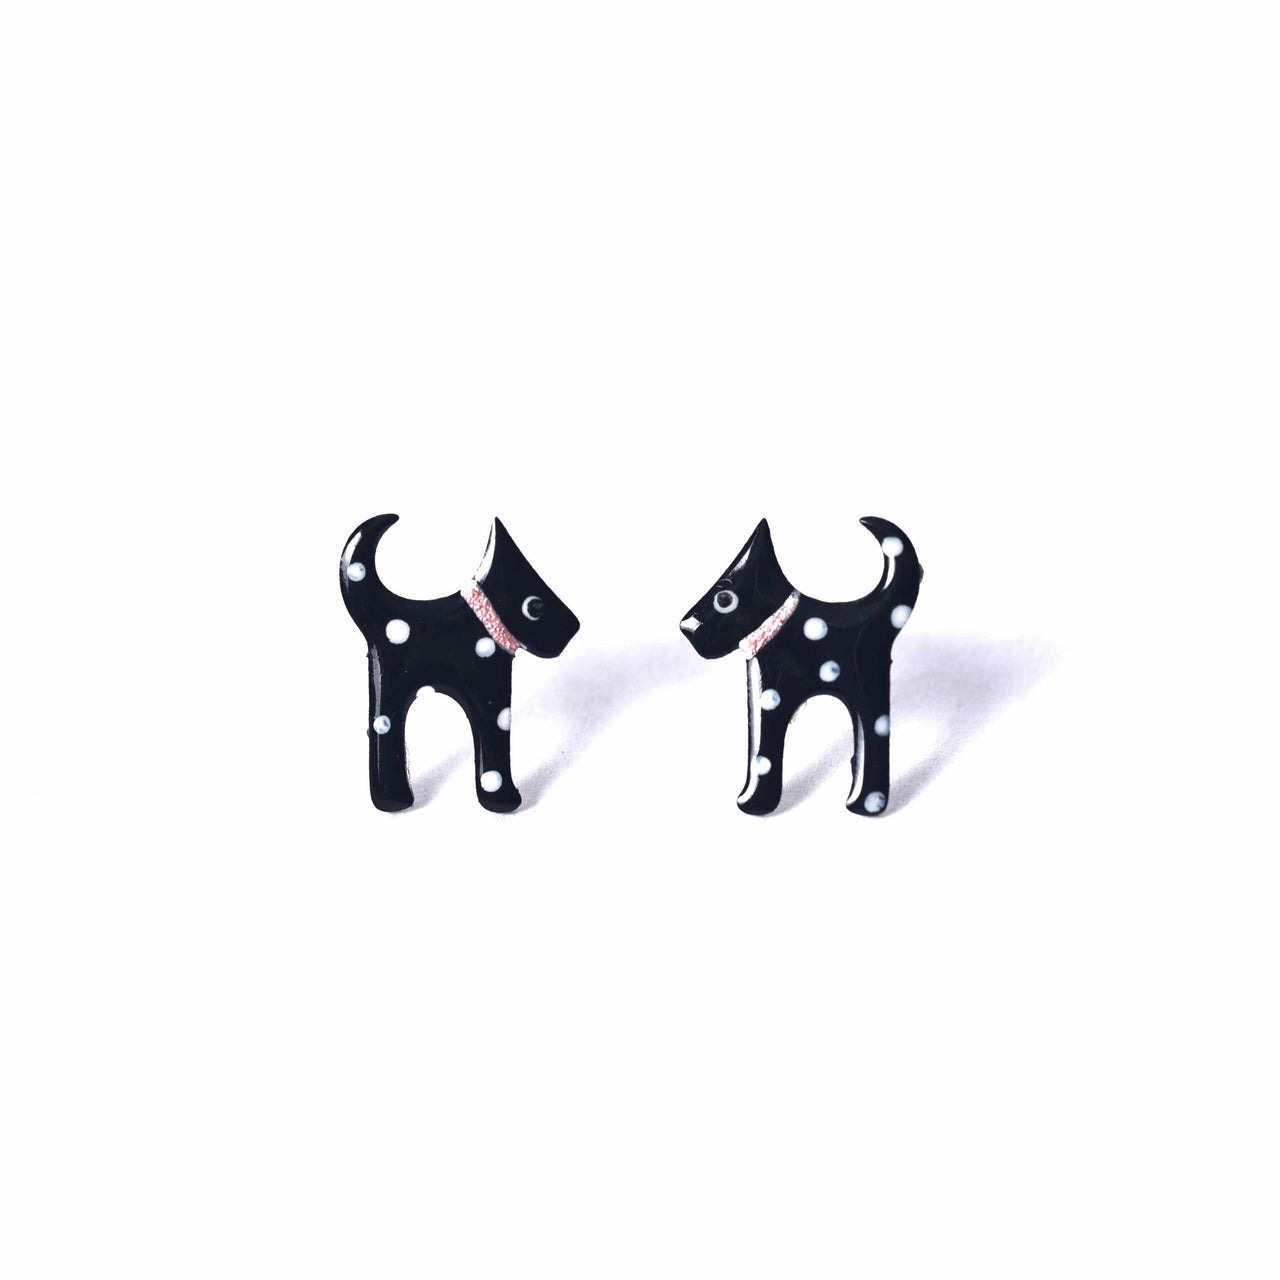 Black dog stud earrings with polka dots